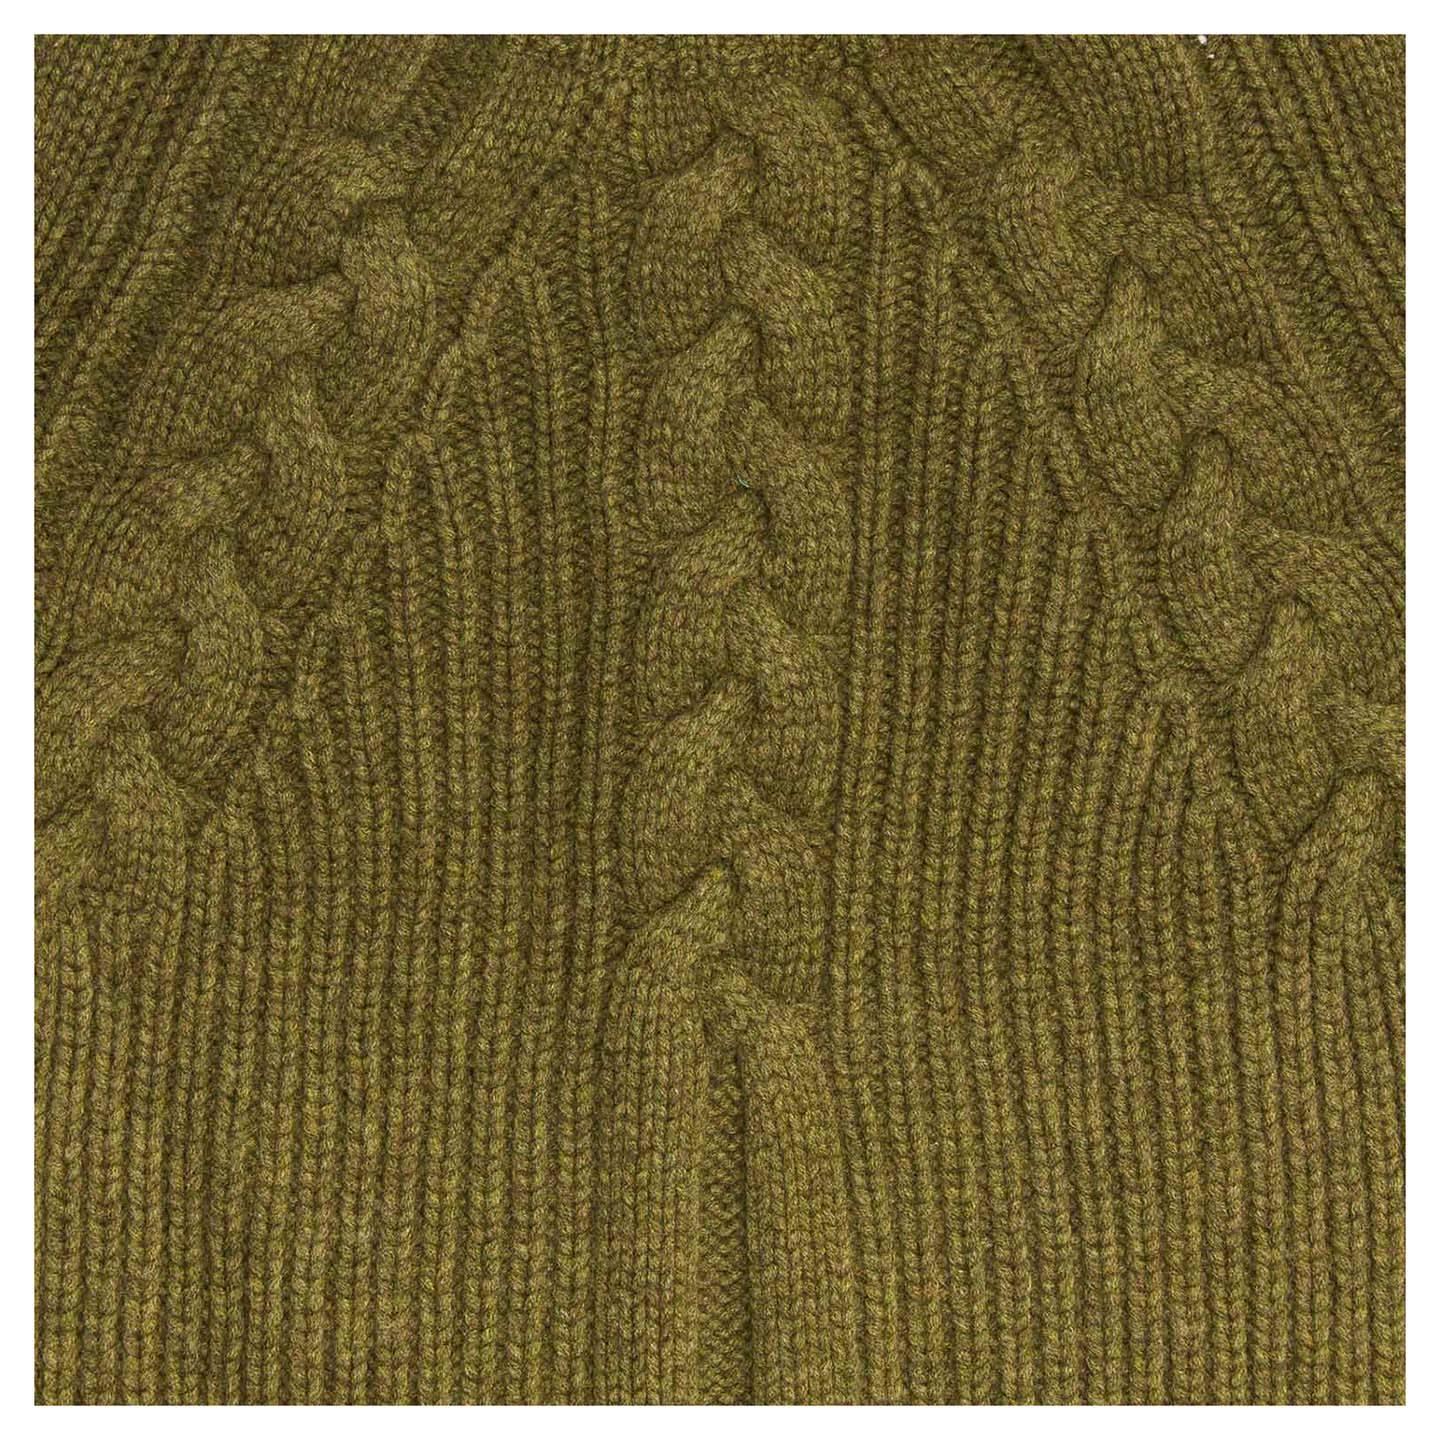 Women's Proenza Schouler Musk Green Cashmere Sweater